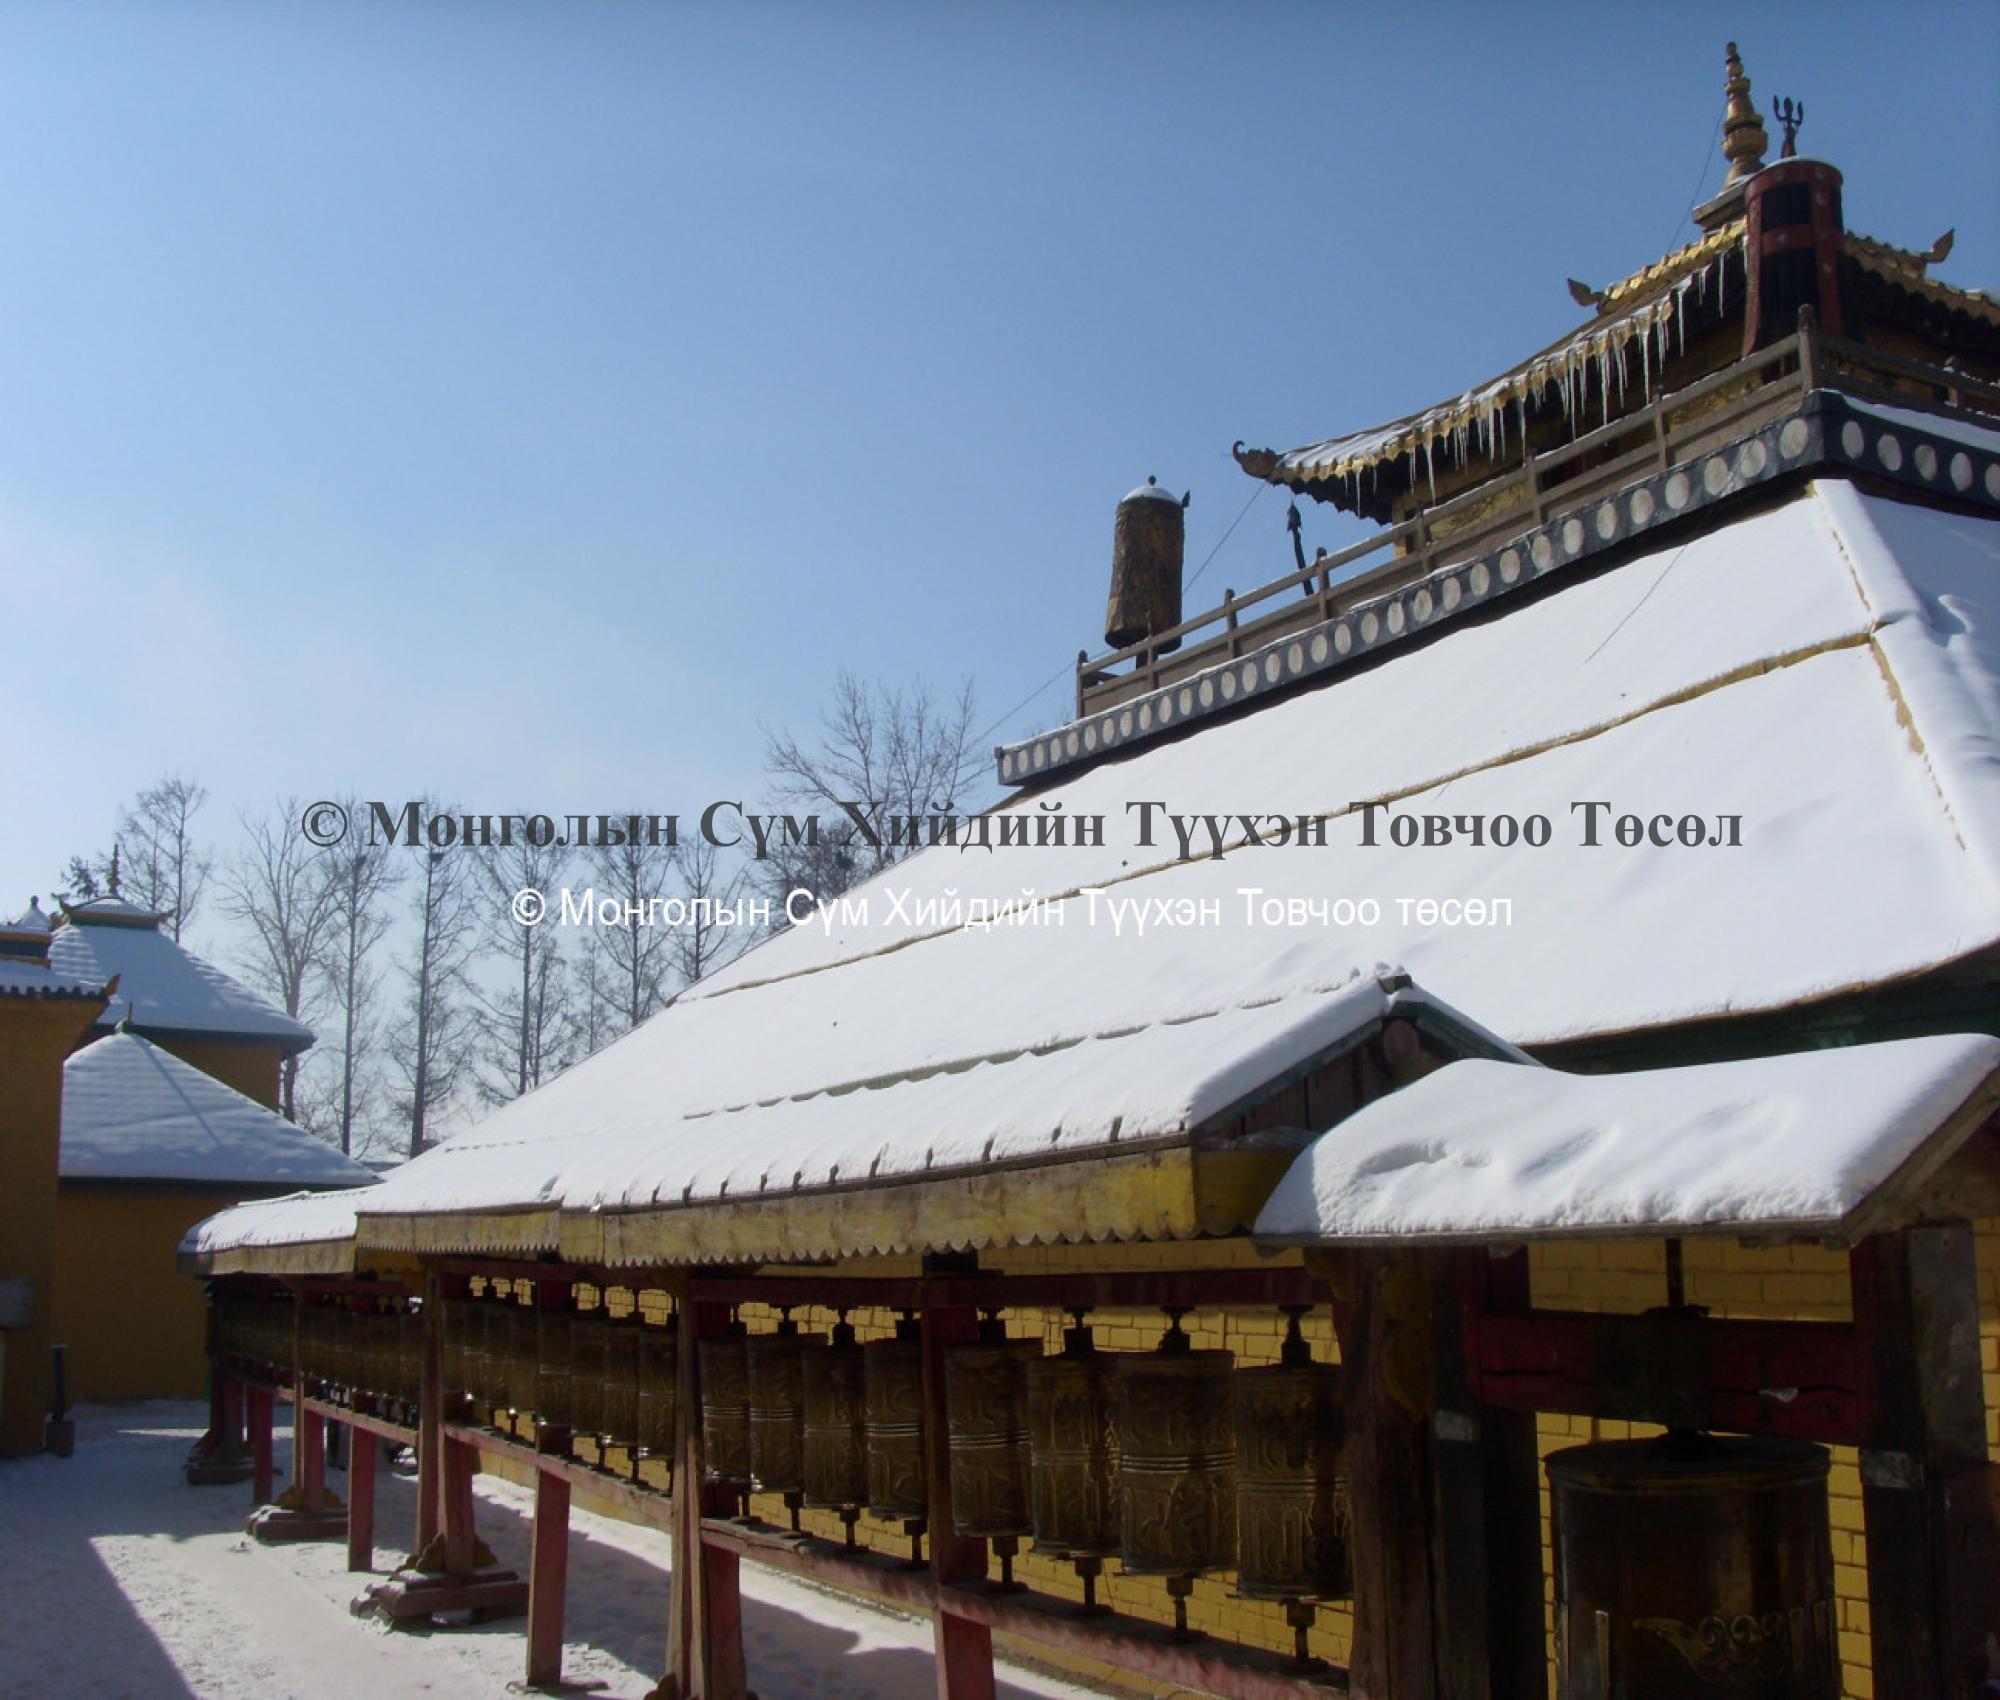 Gandantegchenlin Temple in winter